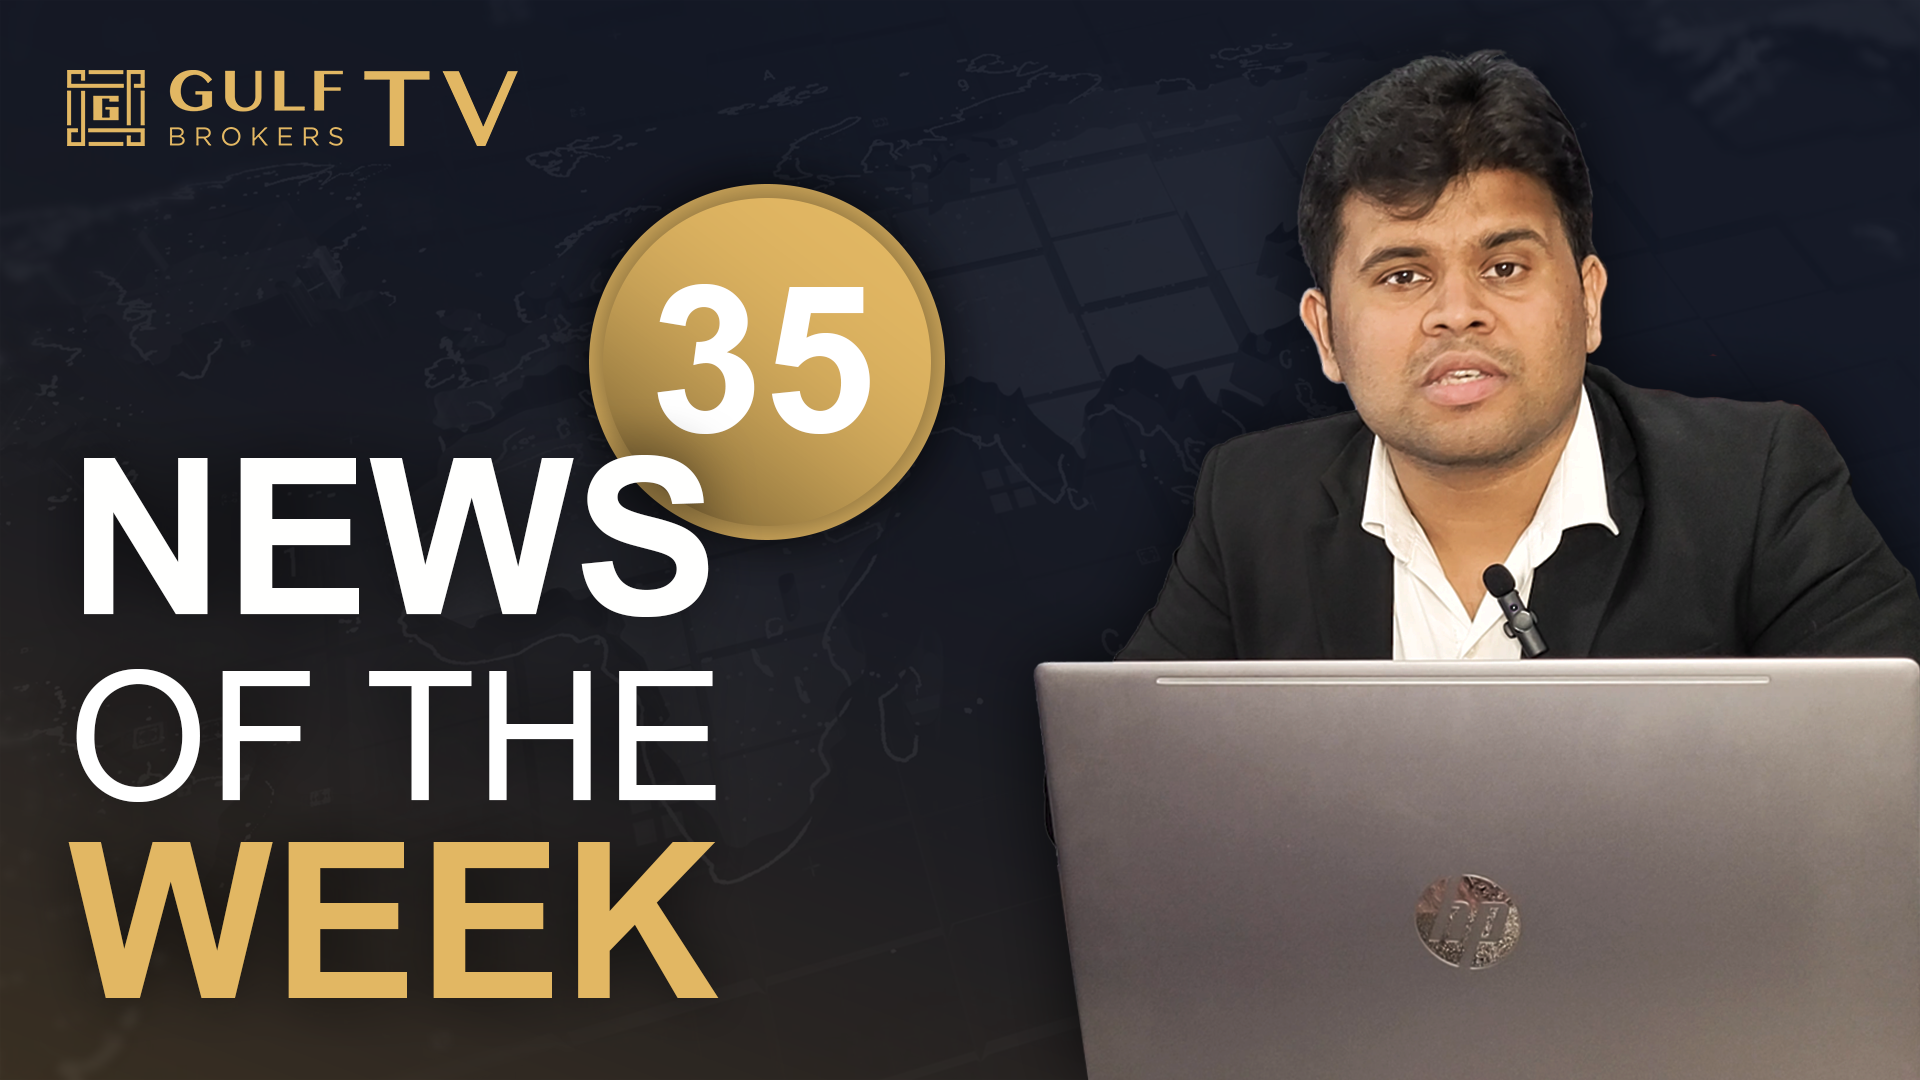 Gulfbrokers | Gulf Brokers | News of the week 35 | Syam KP